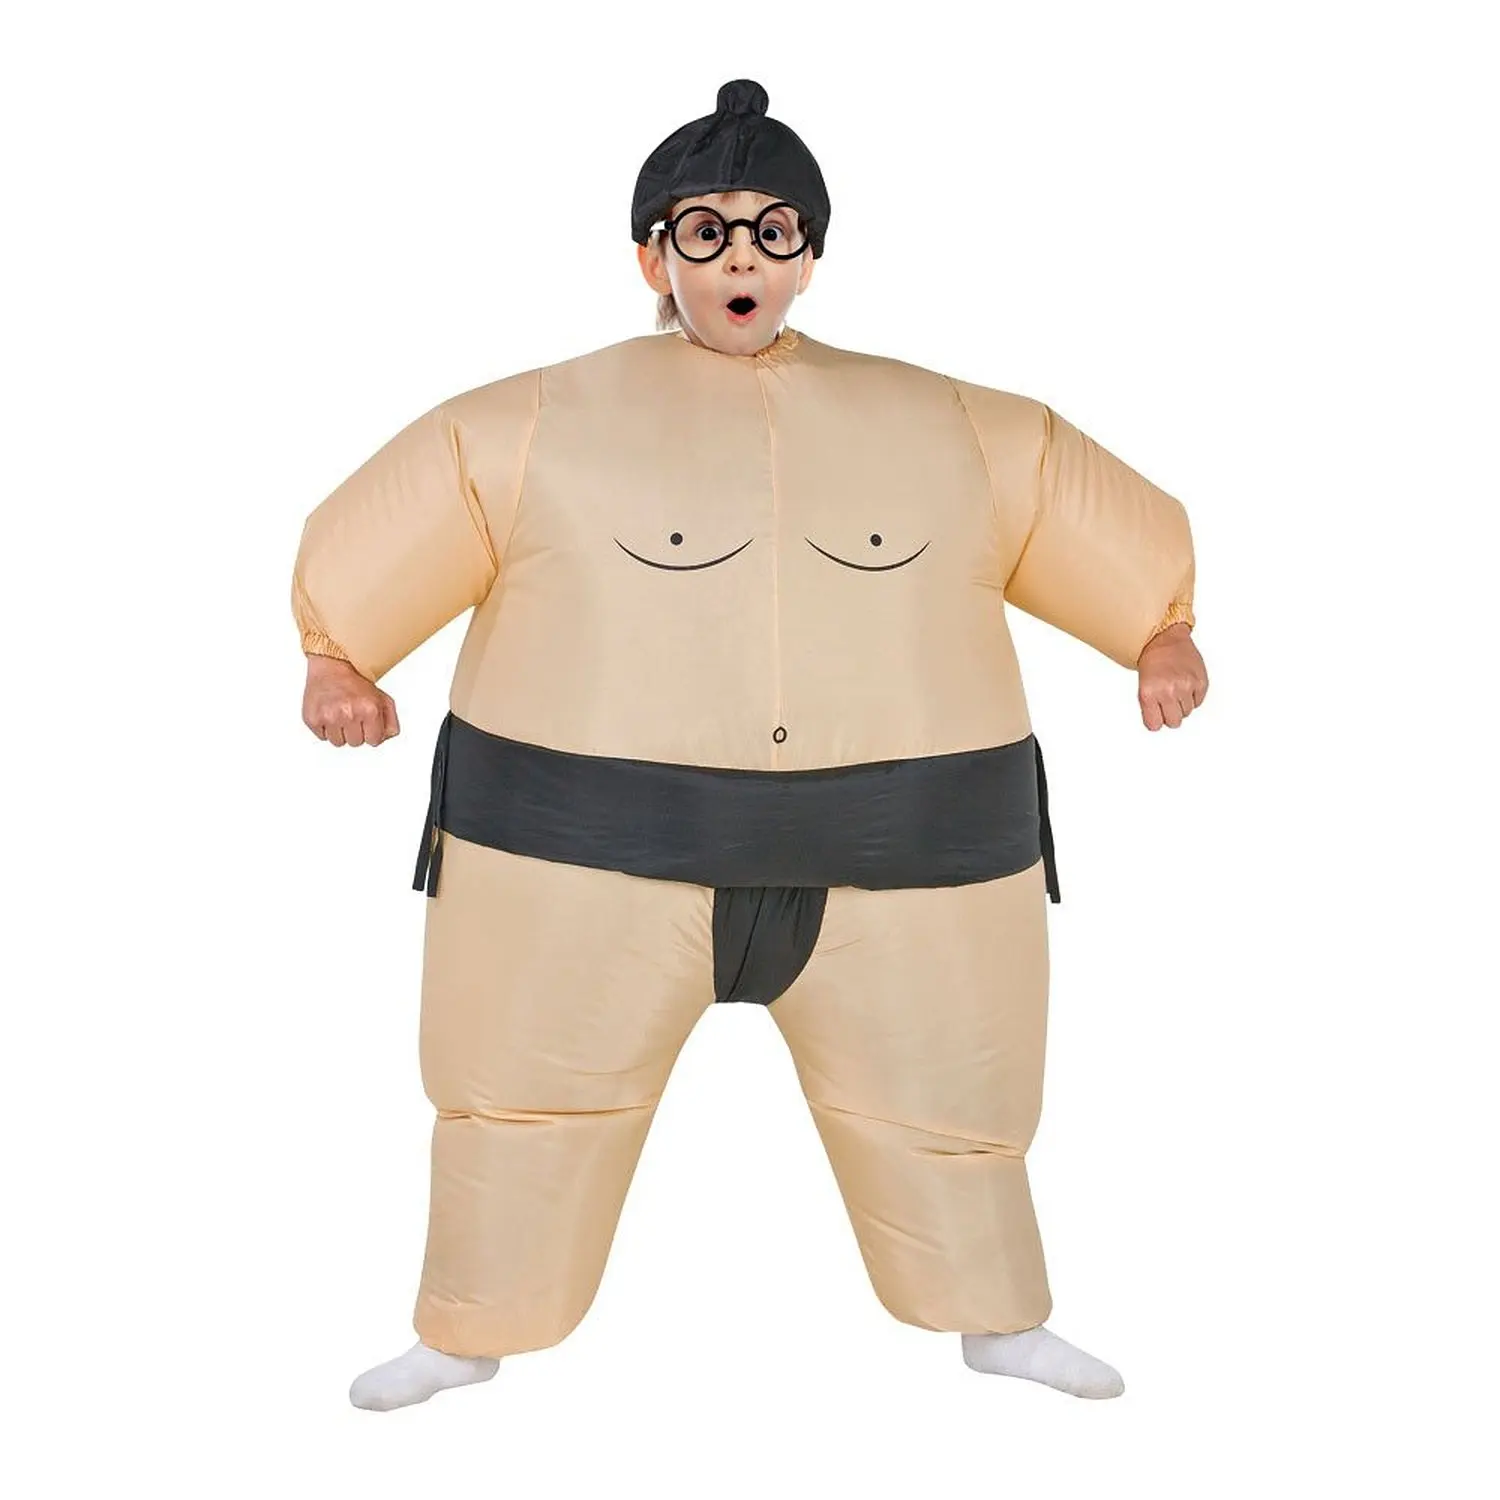 Kids Inflatable Sumo Wrestler Suit Costume for Halloween Purim Dance Party.